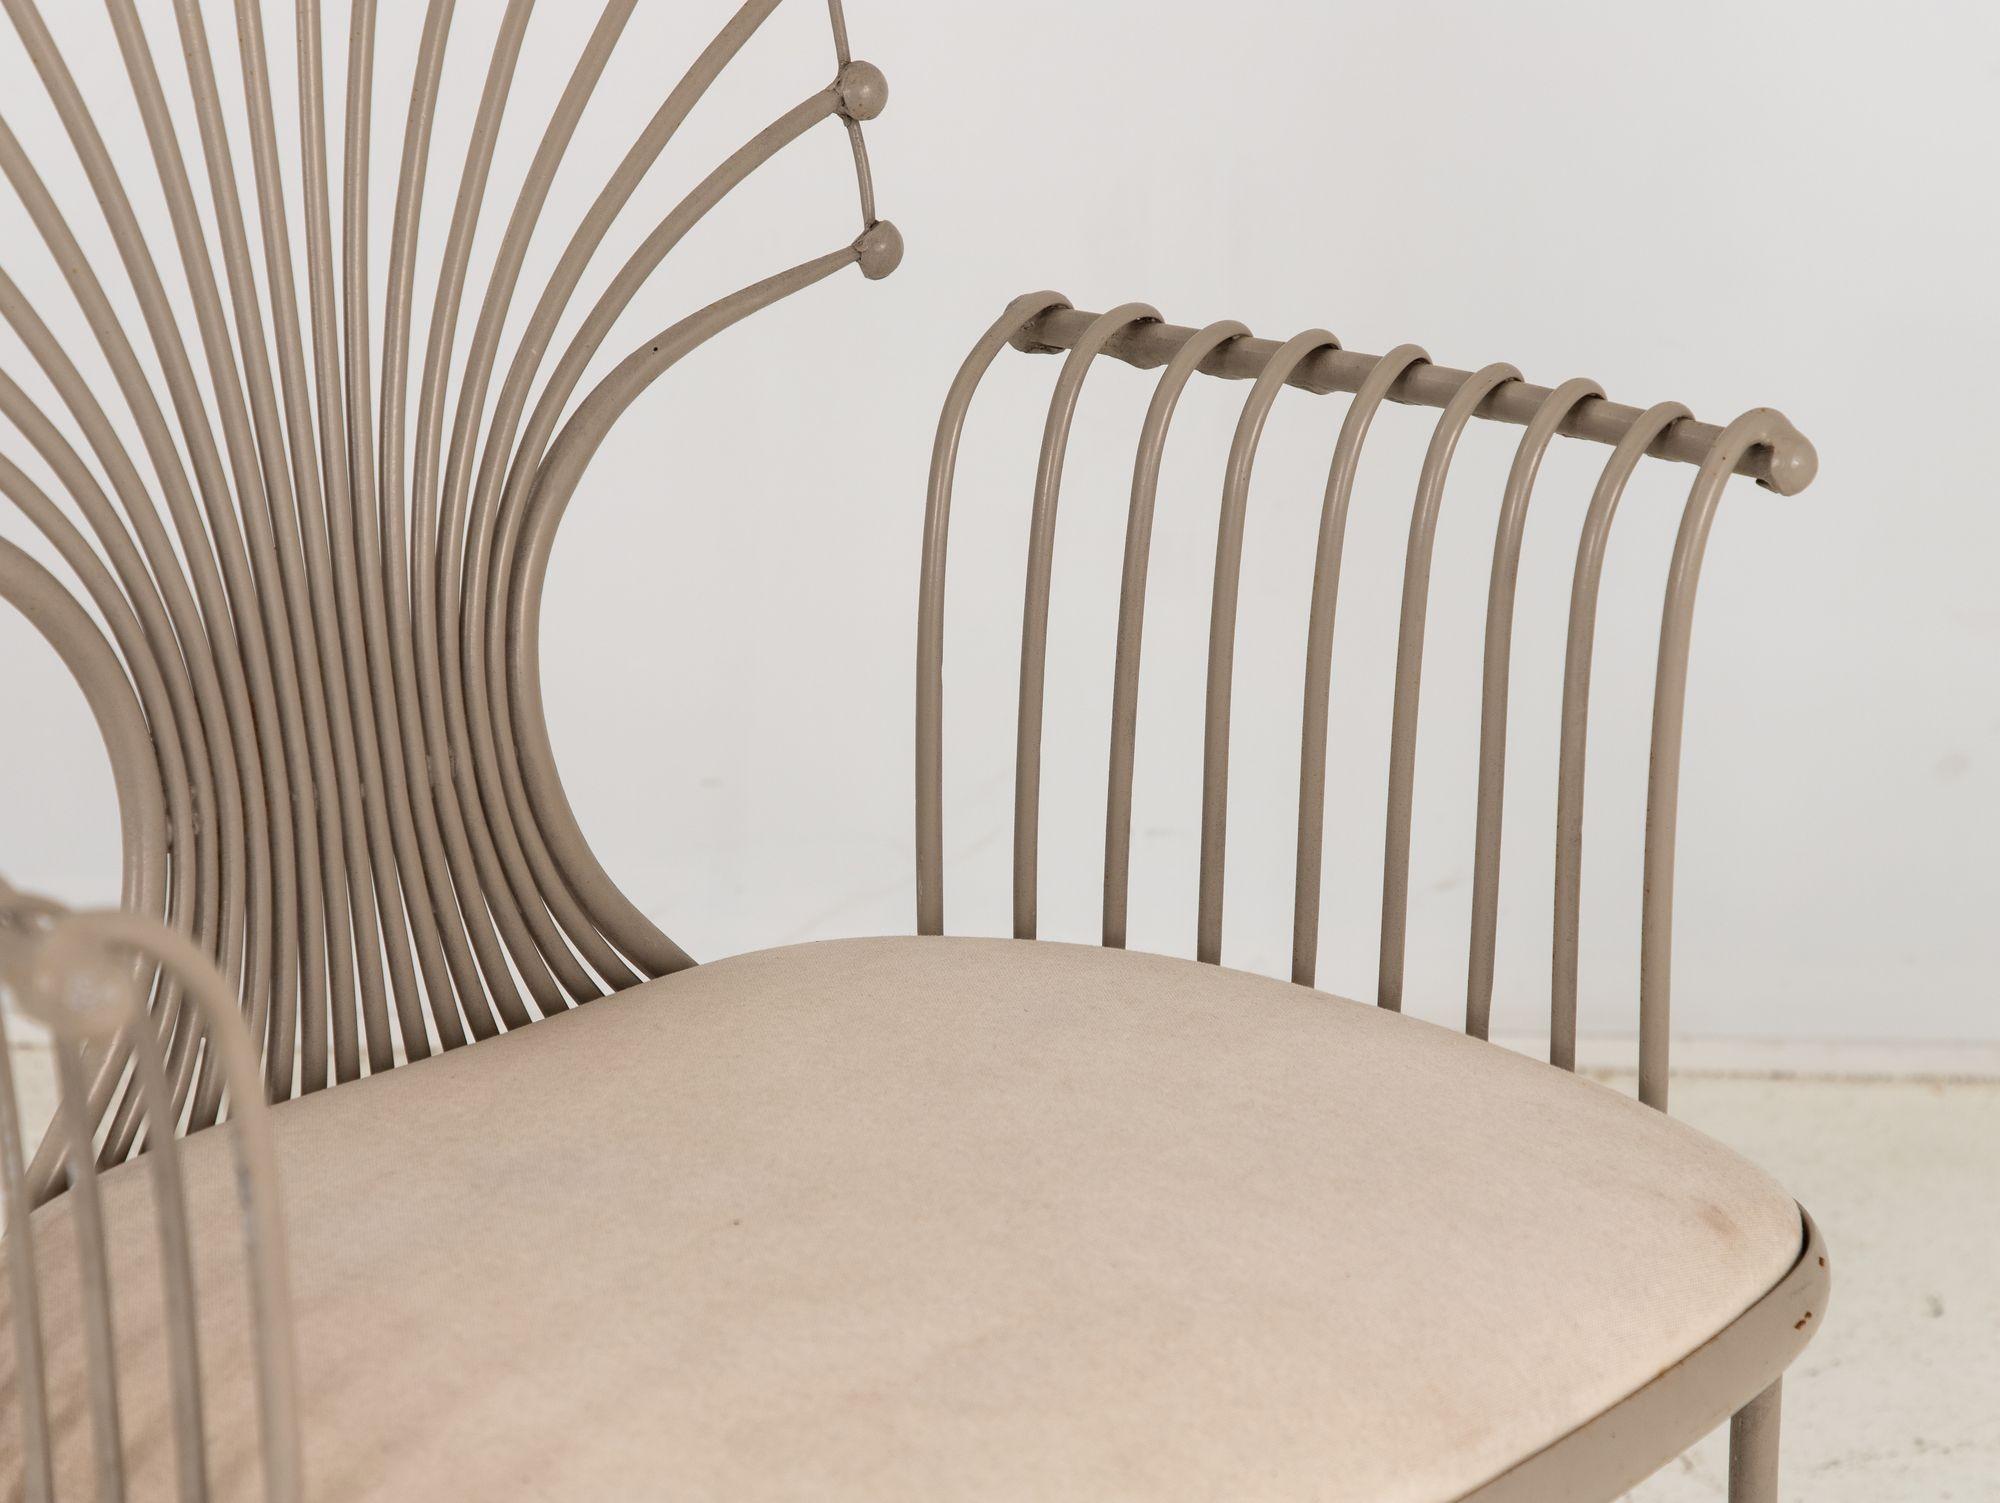 Sessel mit Pfauen- oder Weizengarbenblattmotiv, grau lackiertes Aluminium, Sessel im Angebot 5